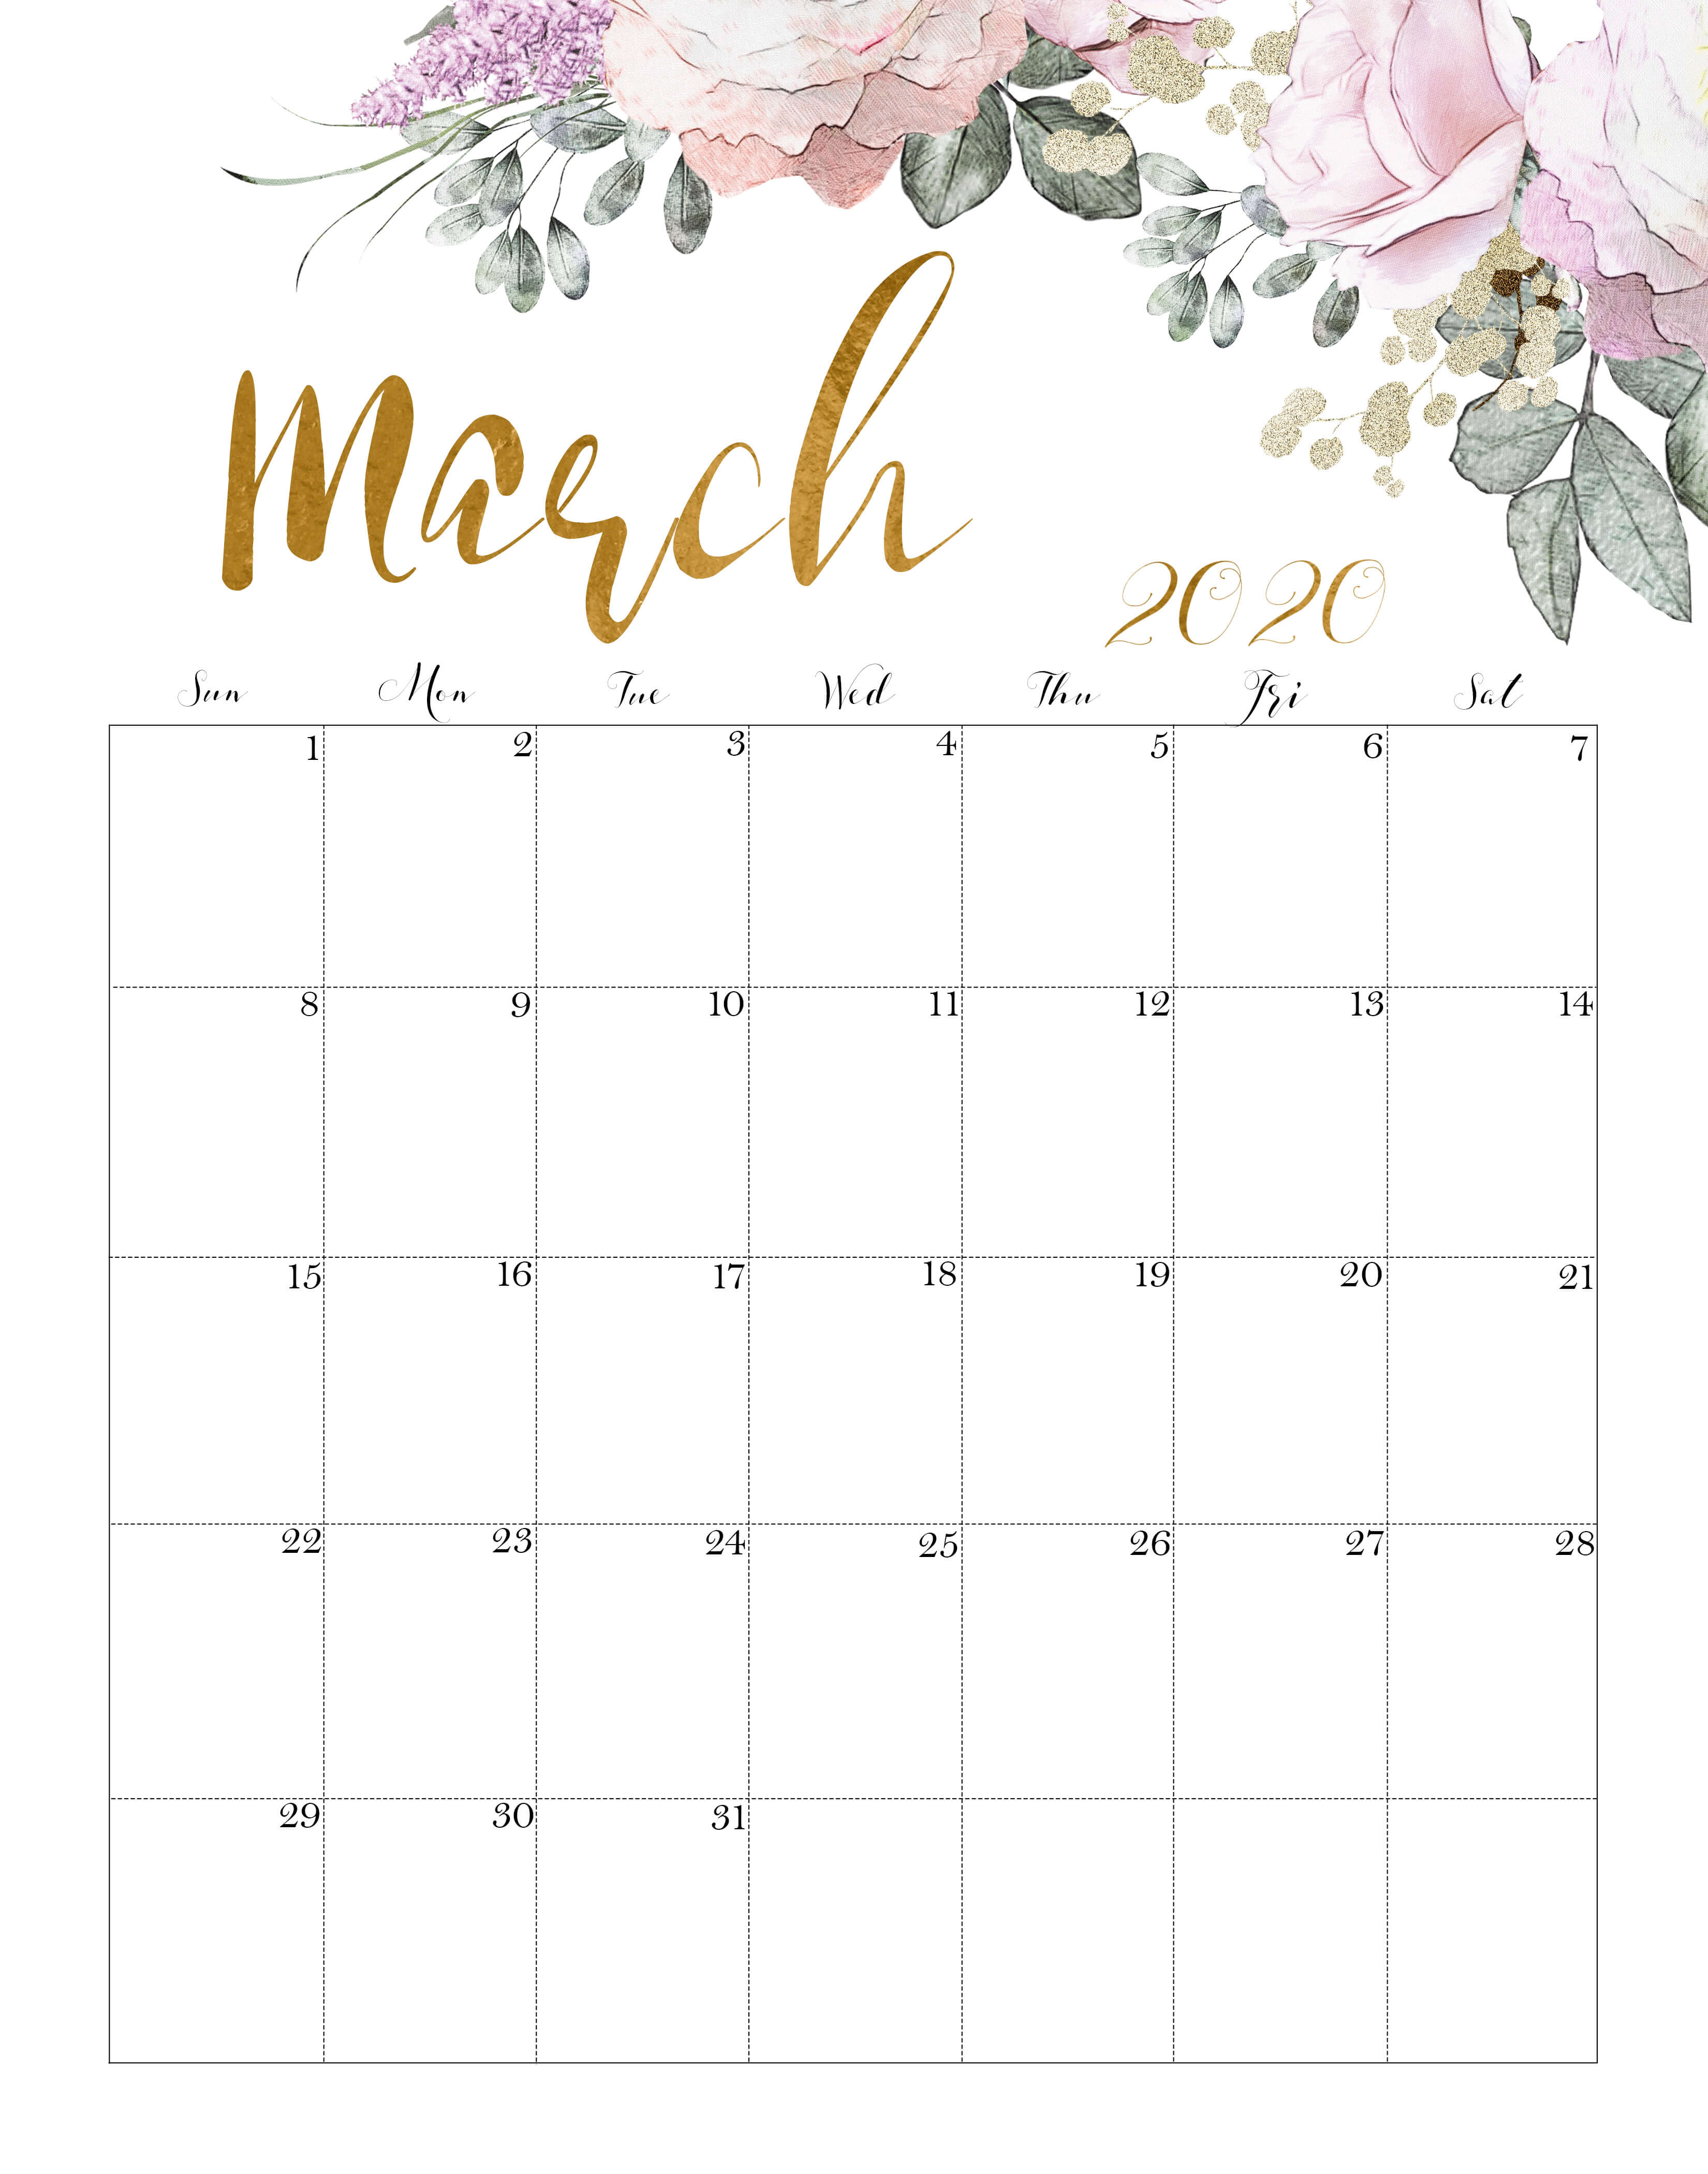 Cute March 2020 Calendar Wallpaper for Desktop and iPhone